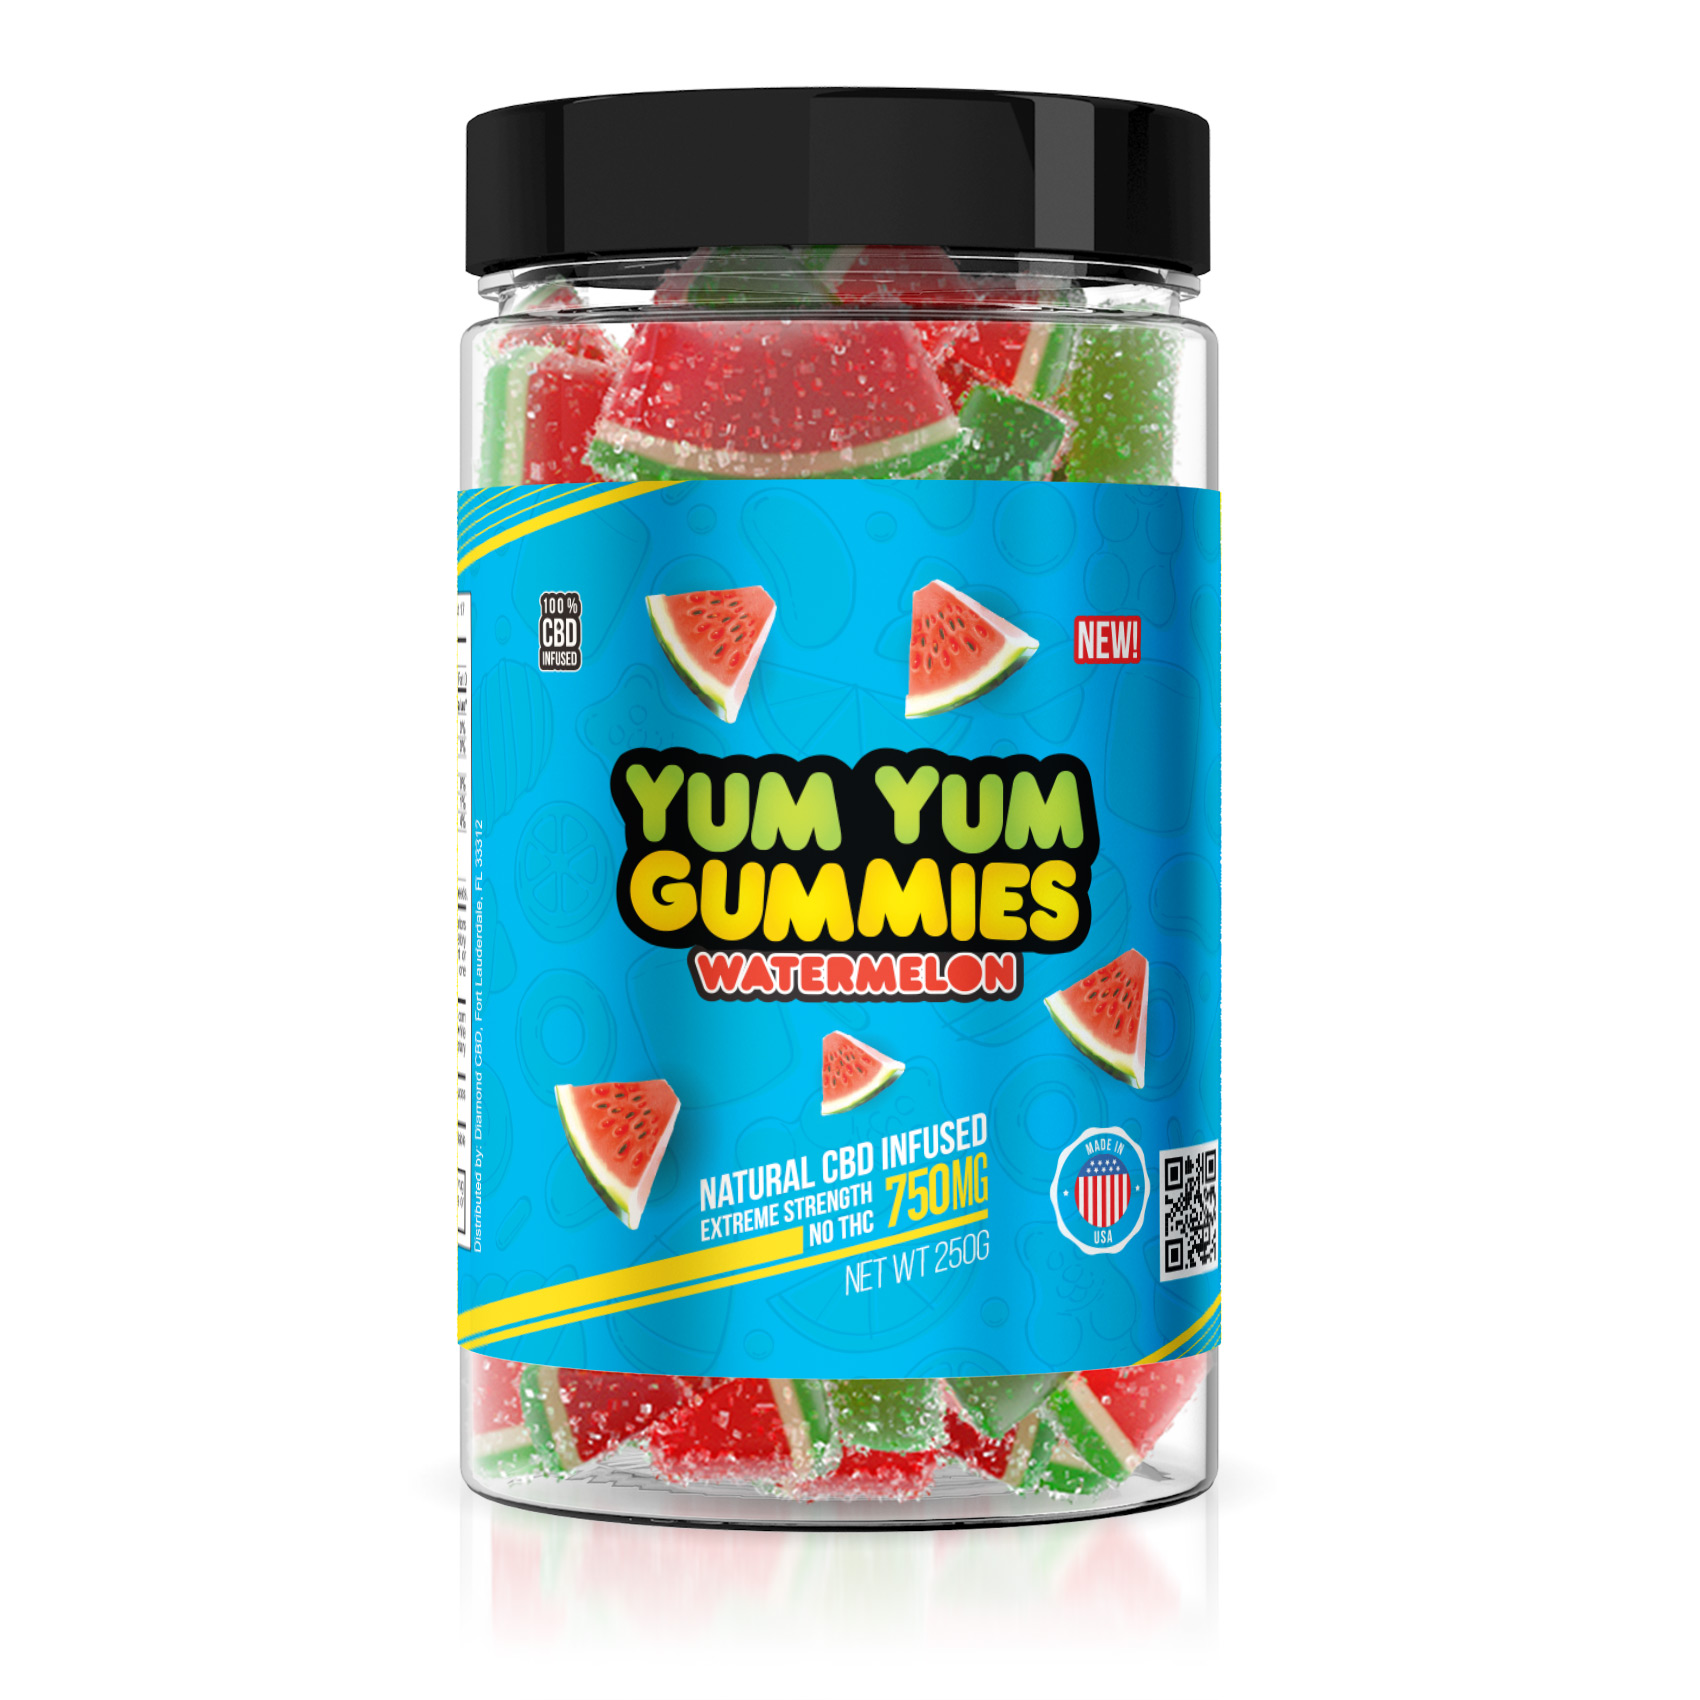 Yum Yum Gummies 750mg - CBD Infused Watermelon Slices - Diamond CBD